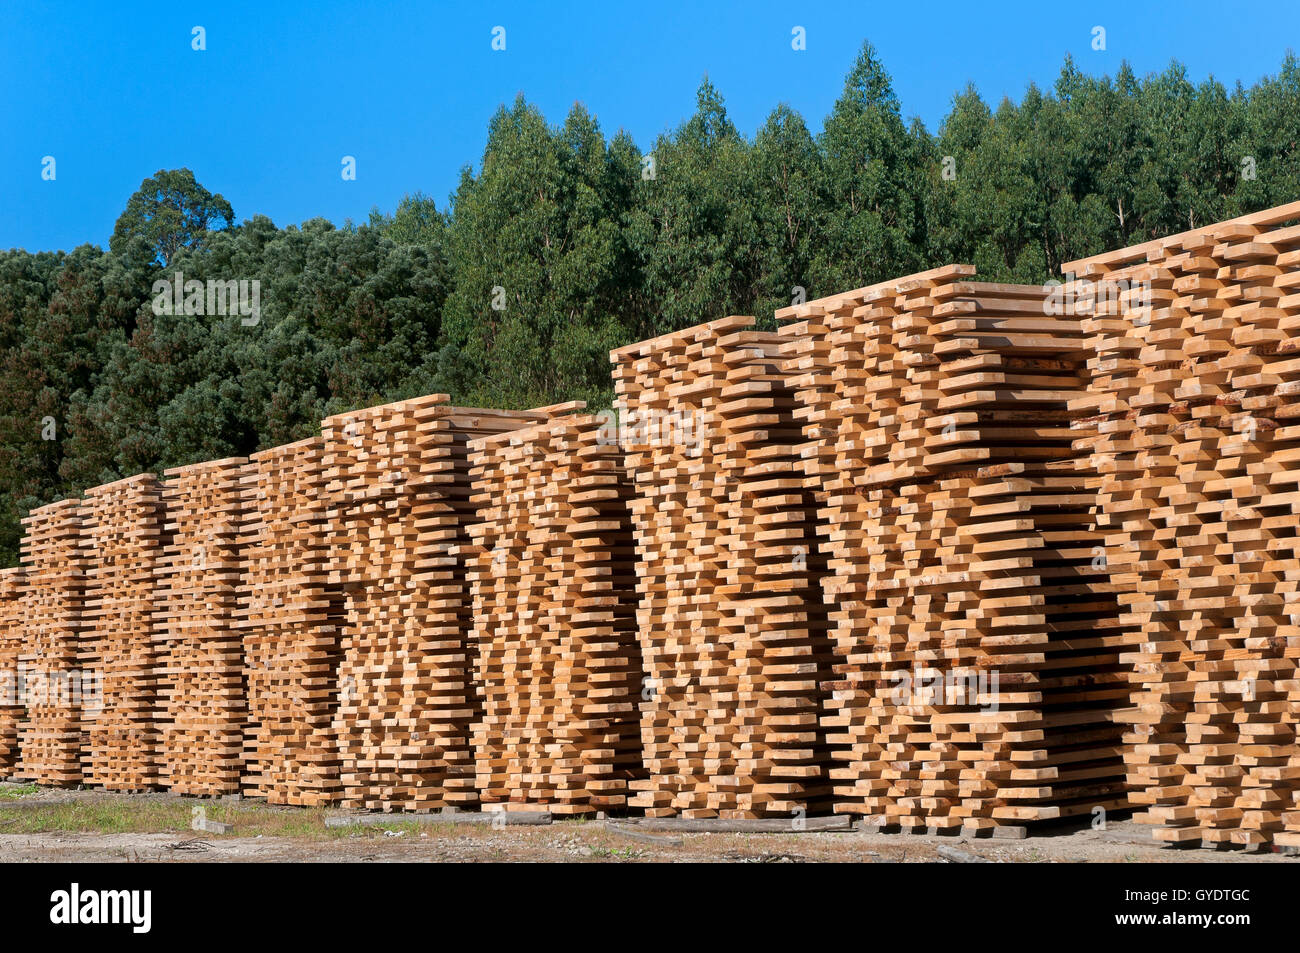 Wood industry, Morpeguite, Muxia, La Coruña province, Region of Galicia, Spain, Europe Stock Photo